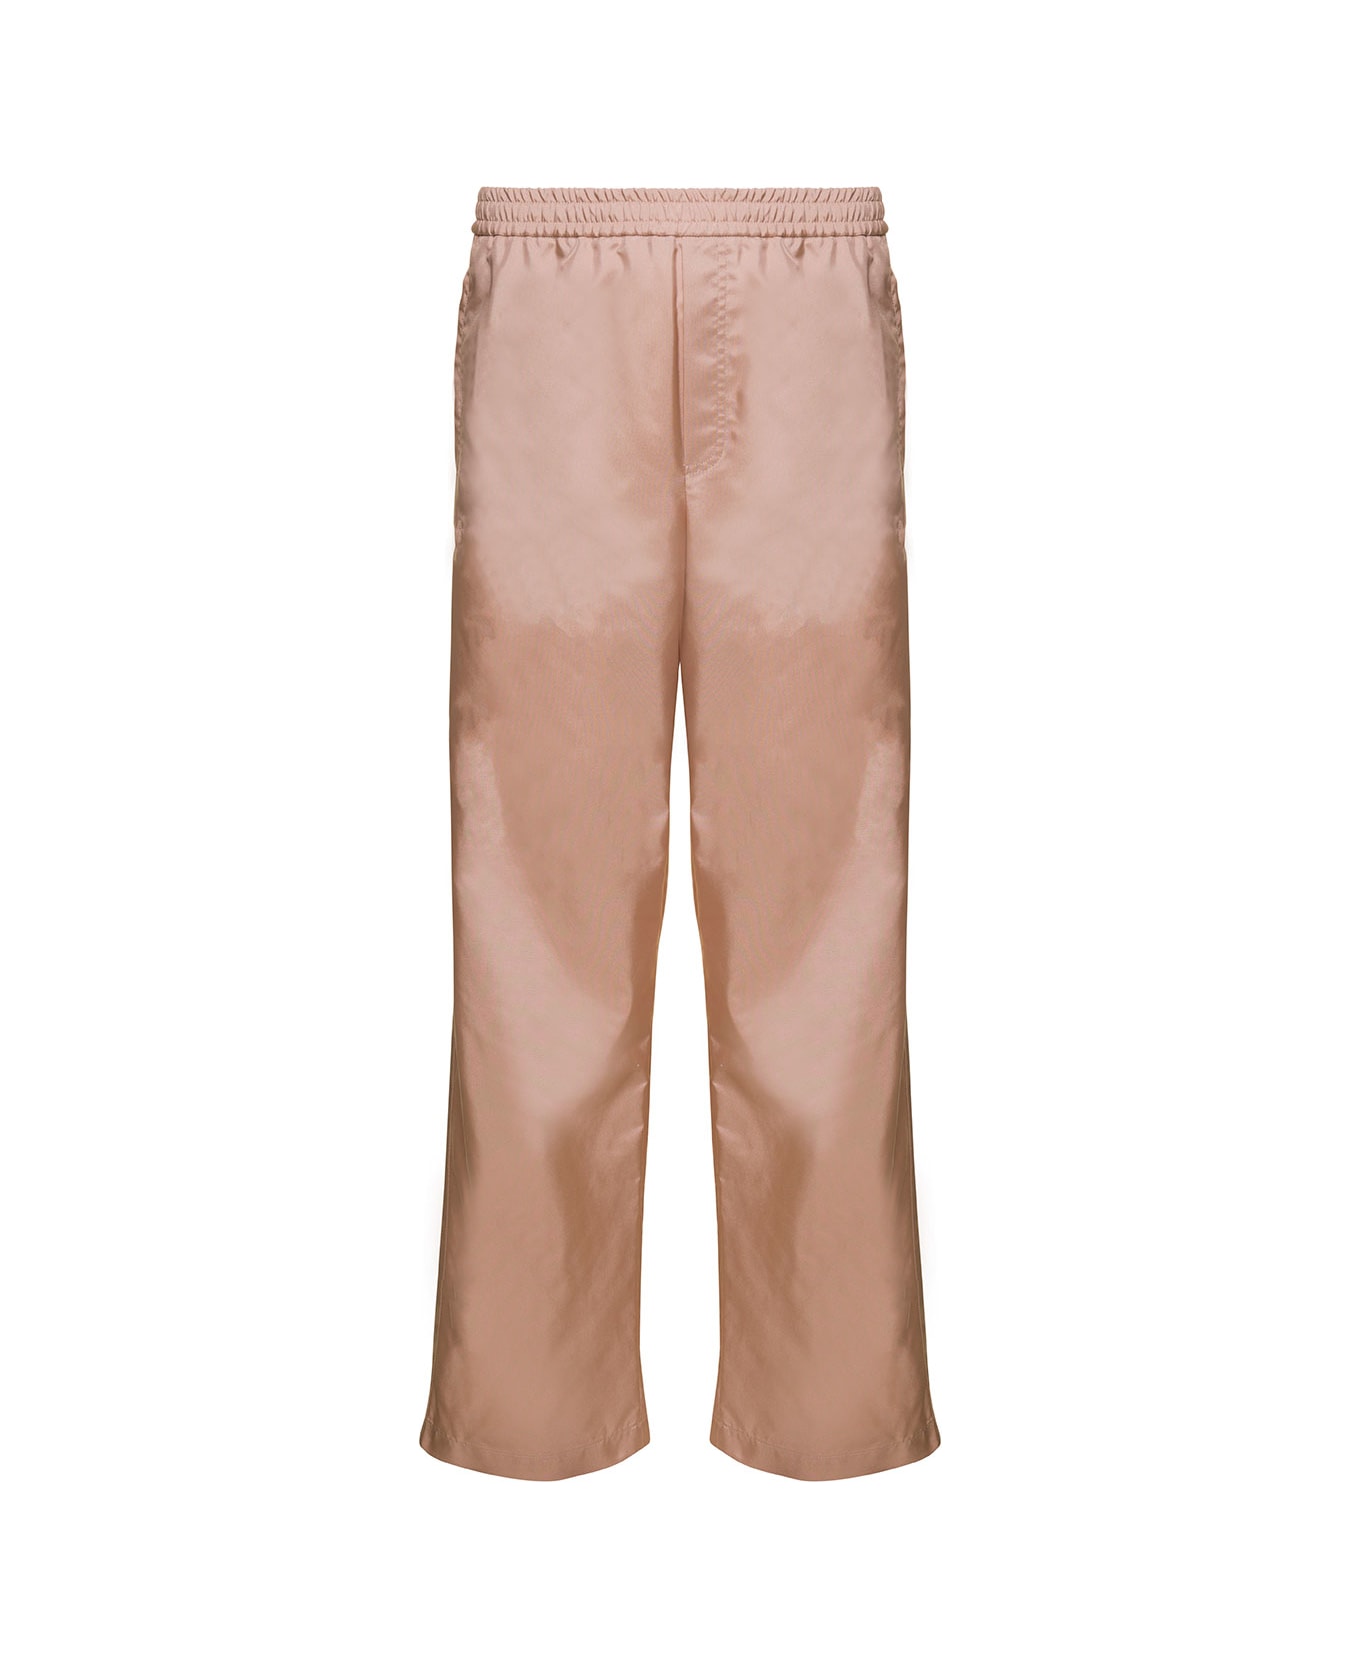 Valentino Pantalone Jogger | Set | Textured Nylon - Sand